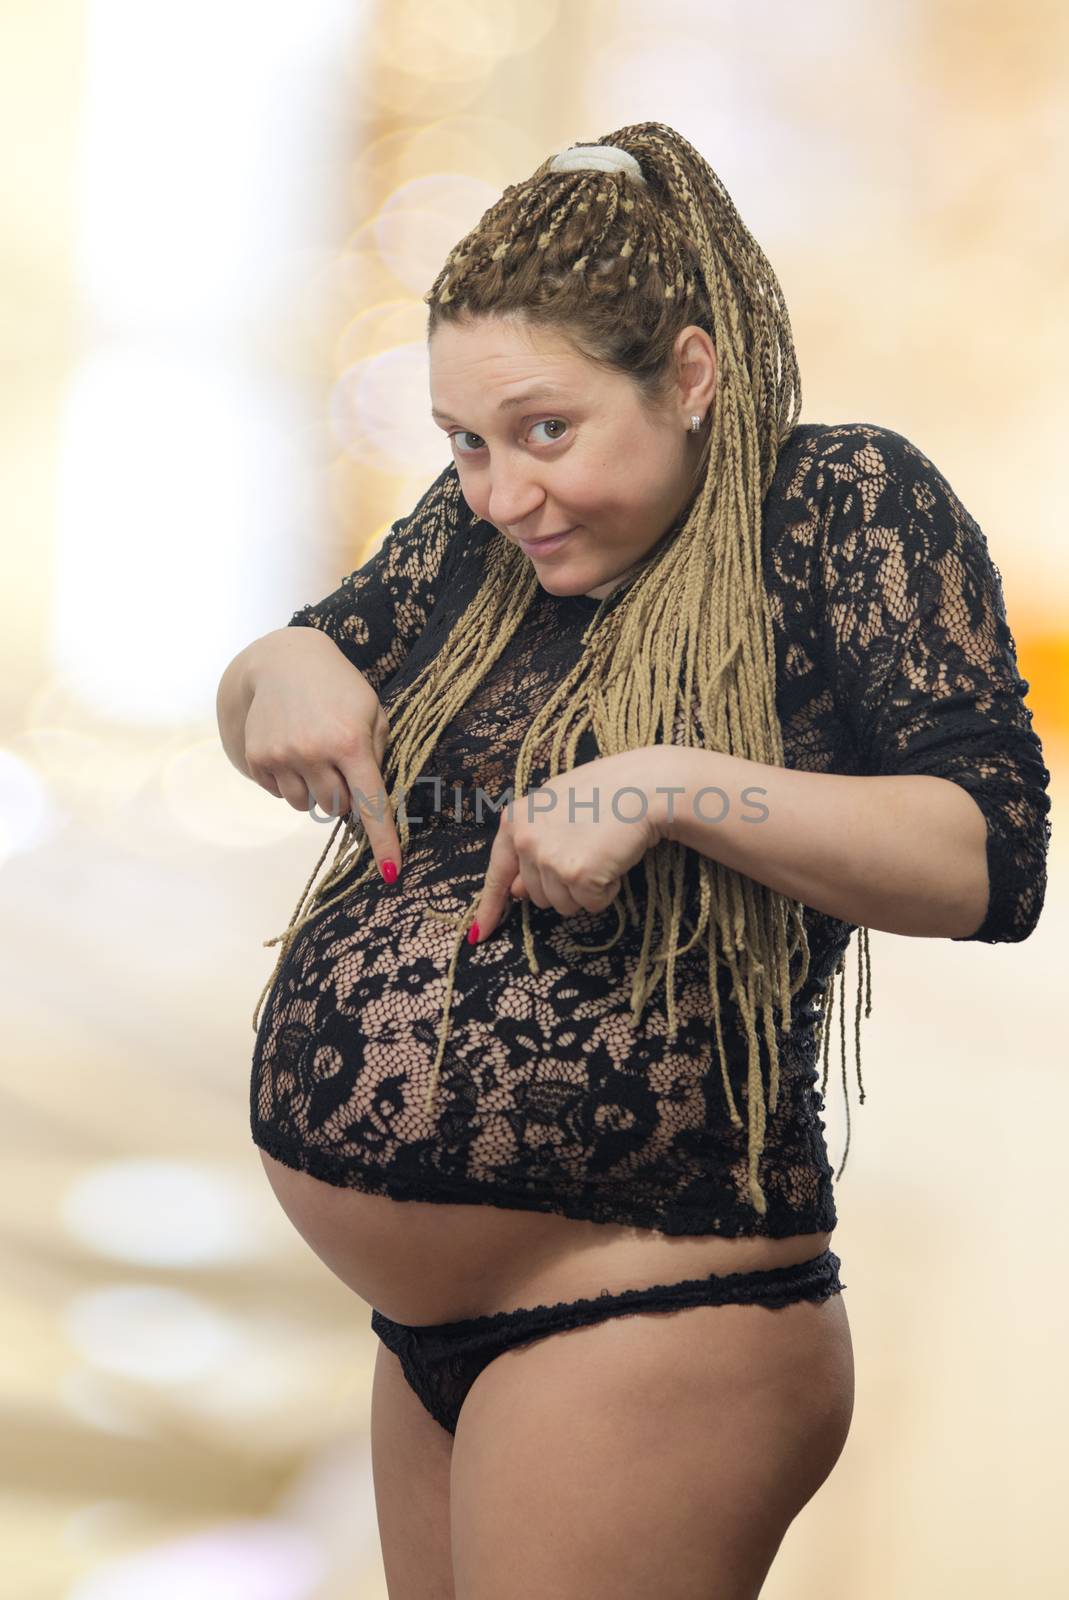 Pregnant Woman Pointing Abdomen by vilevi